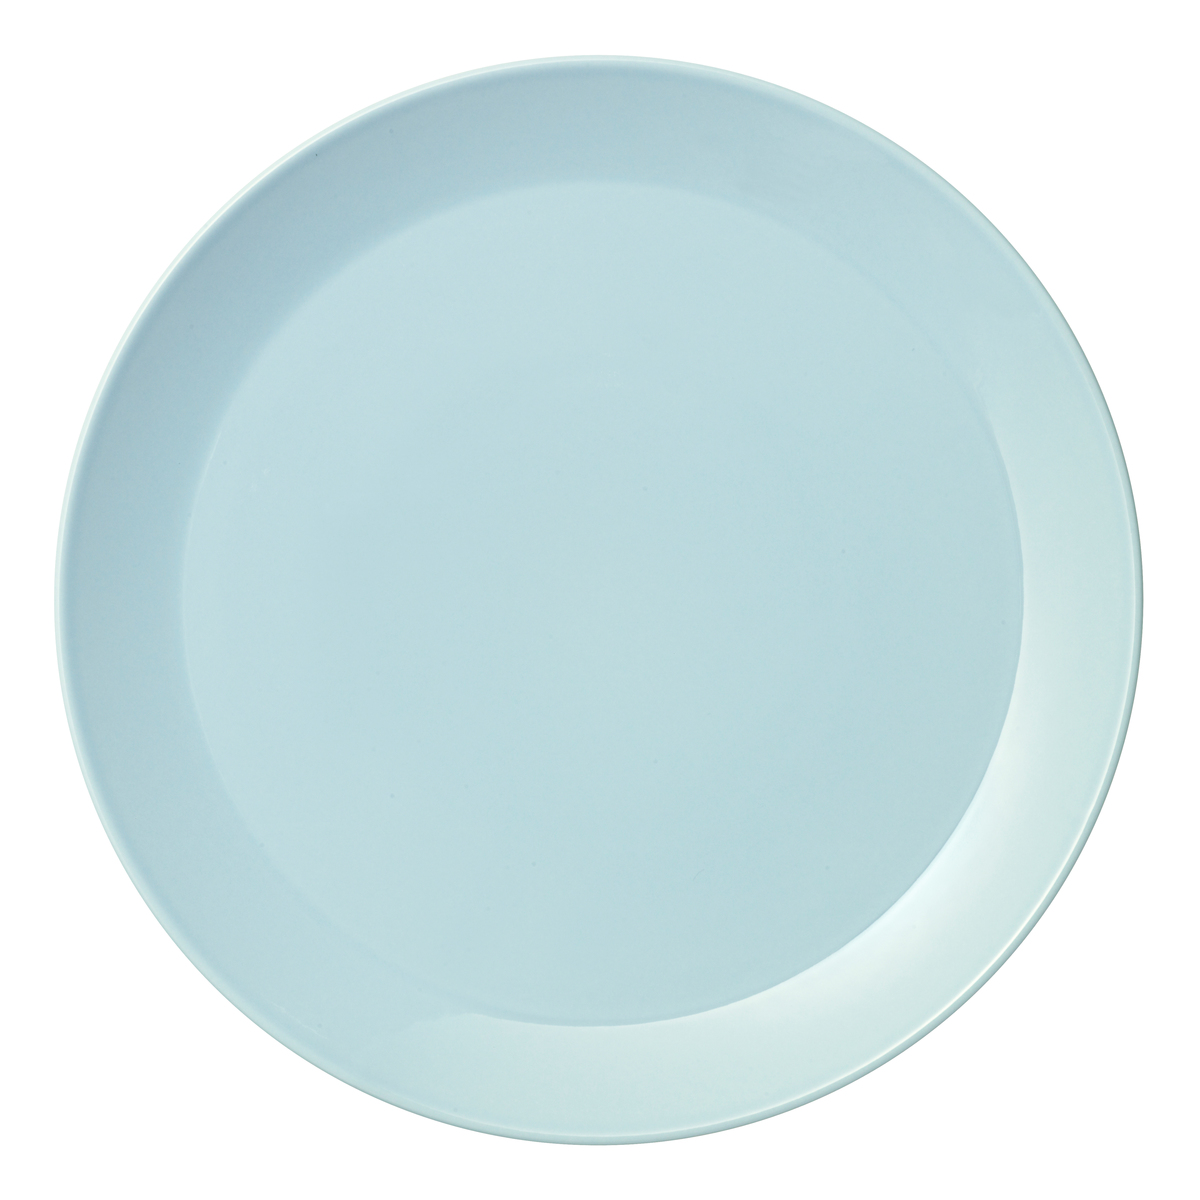 Melamine 24 x 24 x 20 cm zakdesigns Dinner Plate BBQ in Aqua Blue 